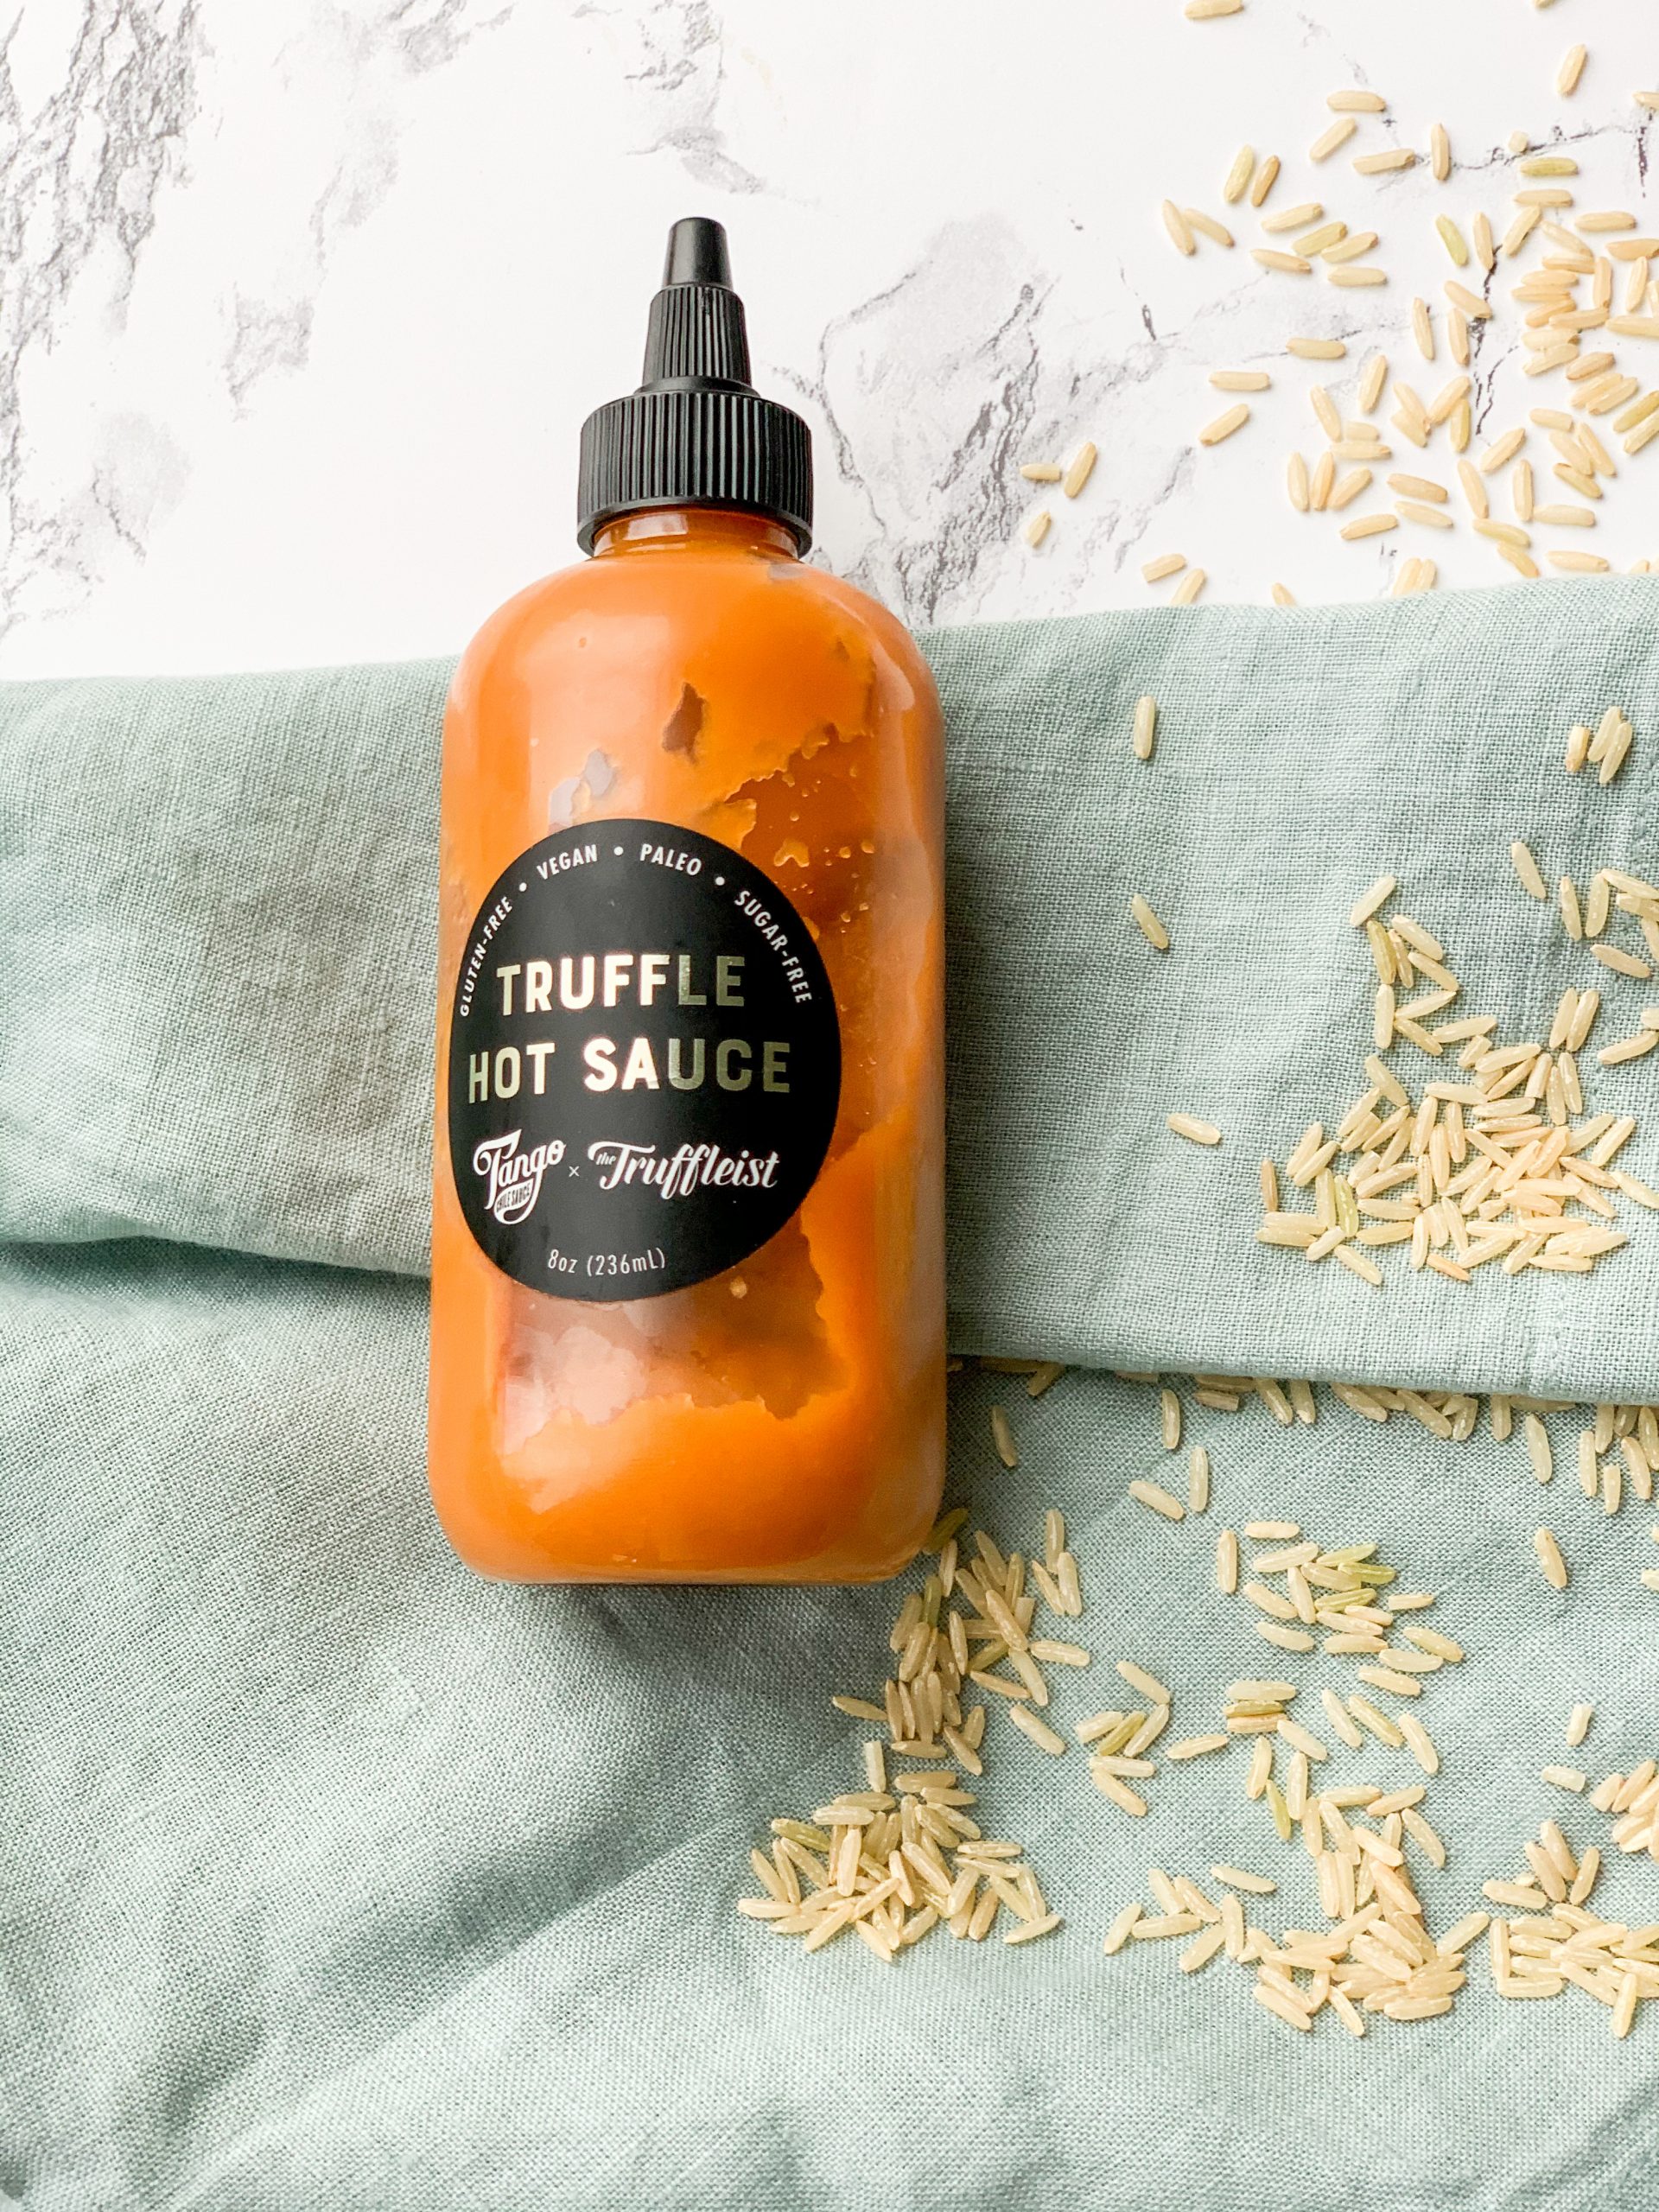 truffle hot sauce in a bottle on a blue napkin